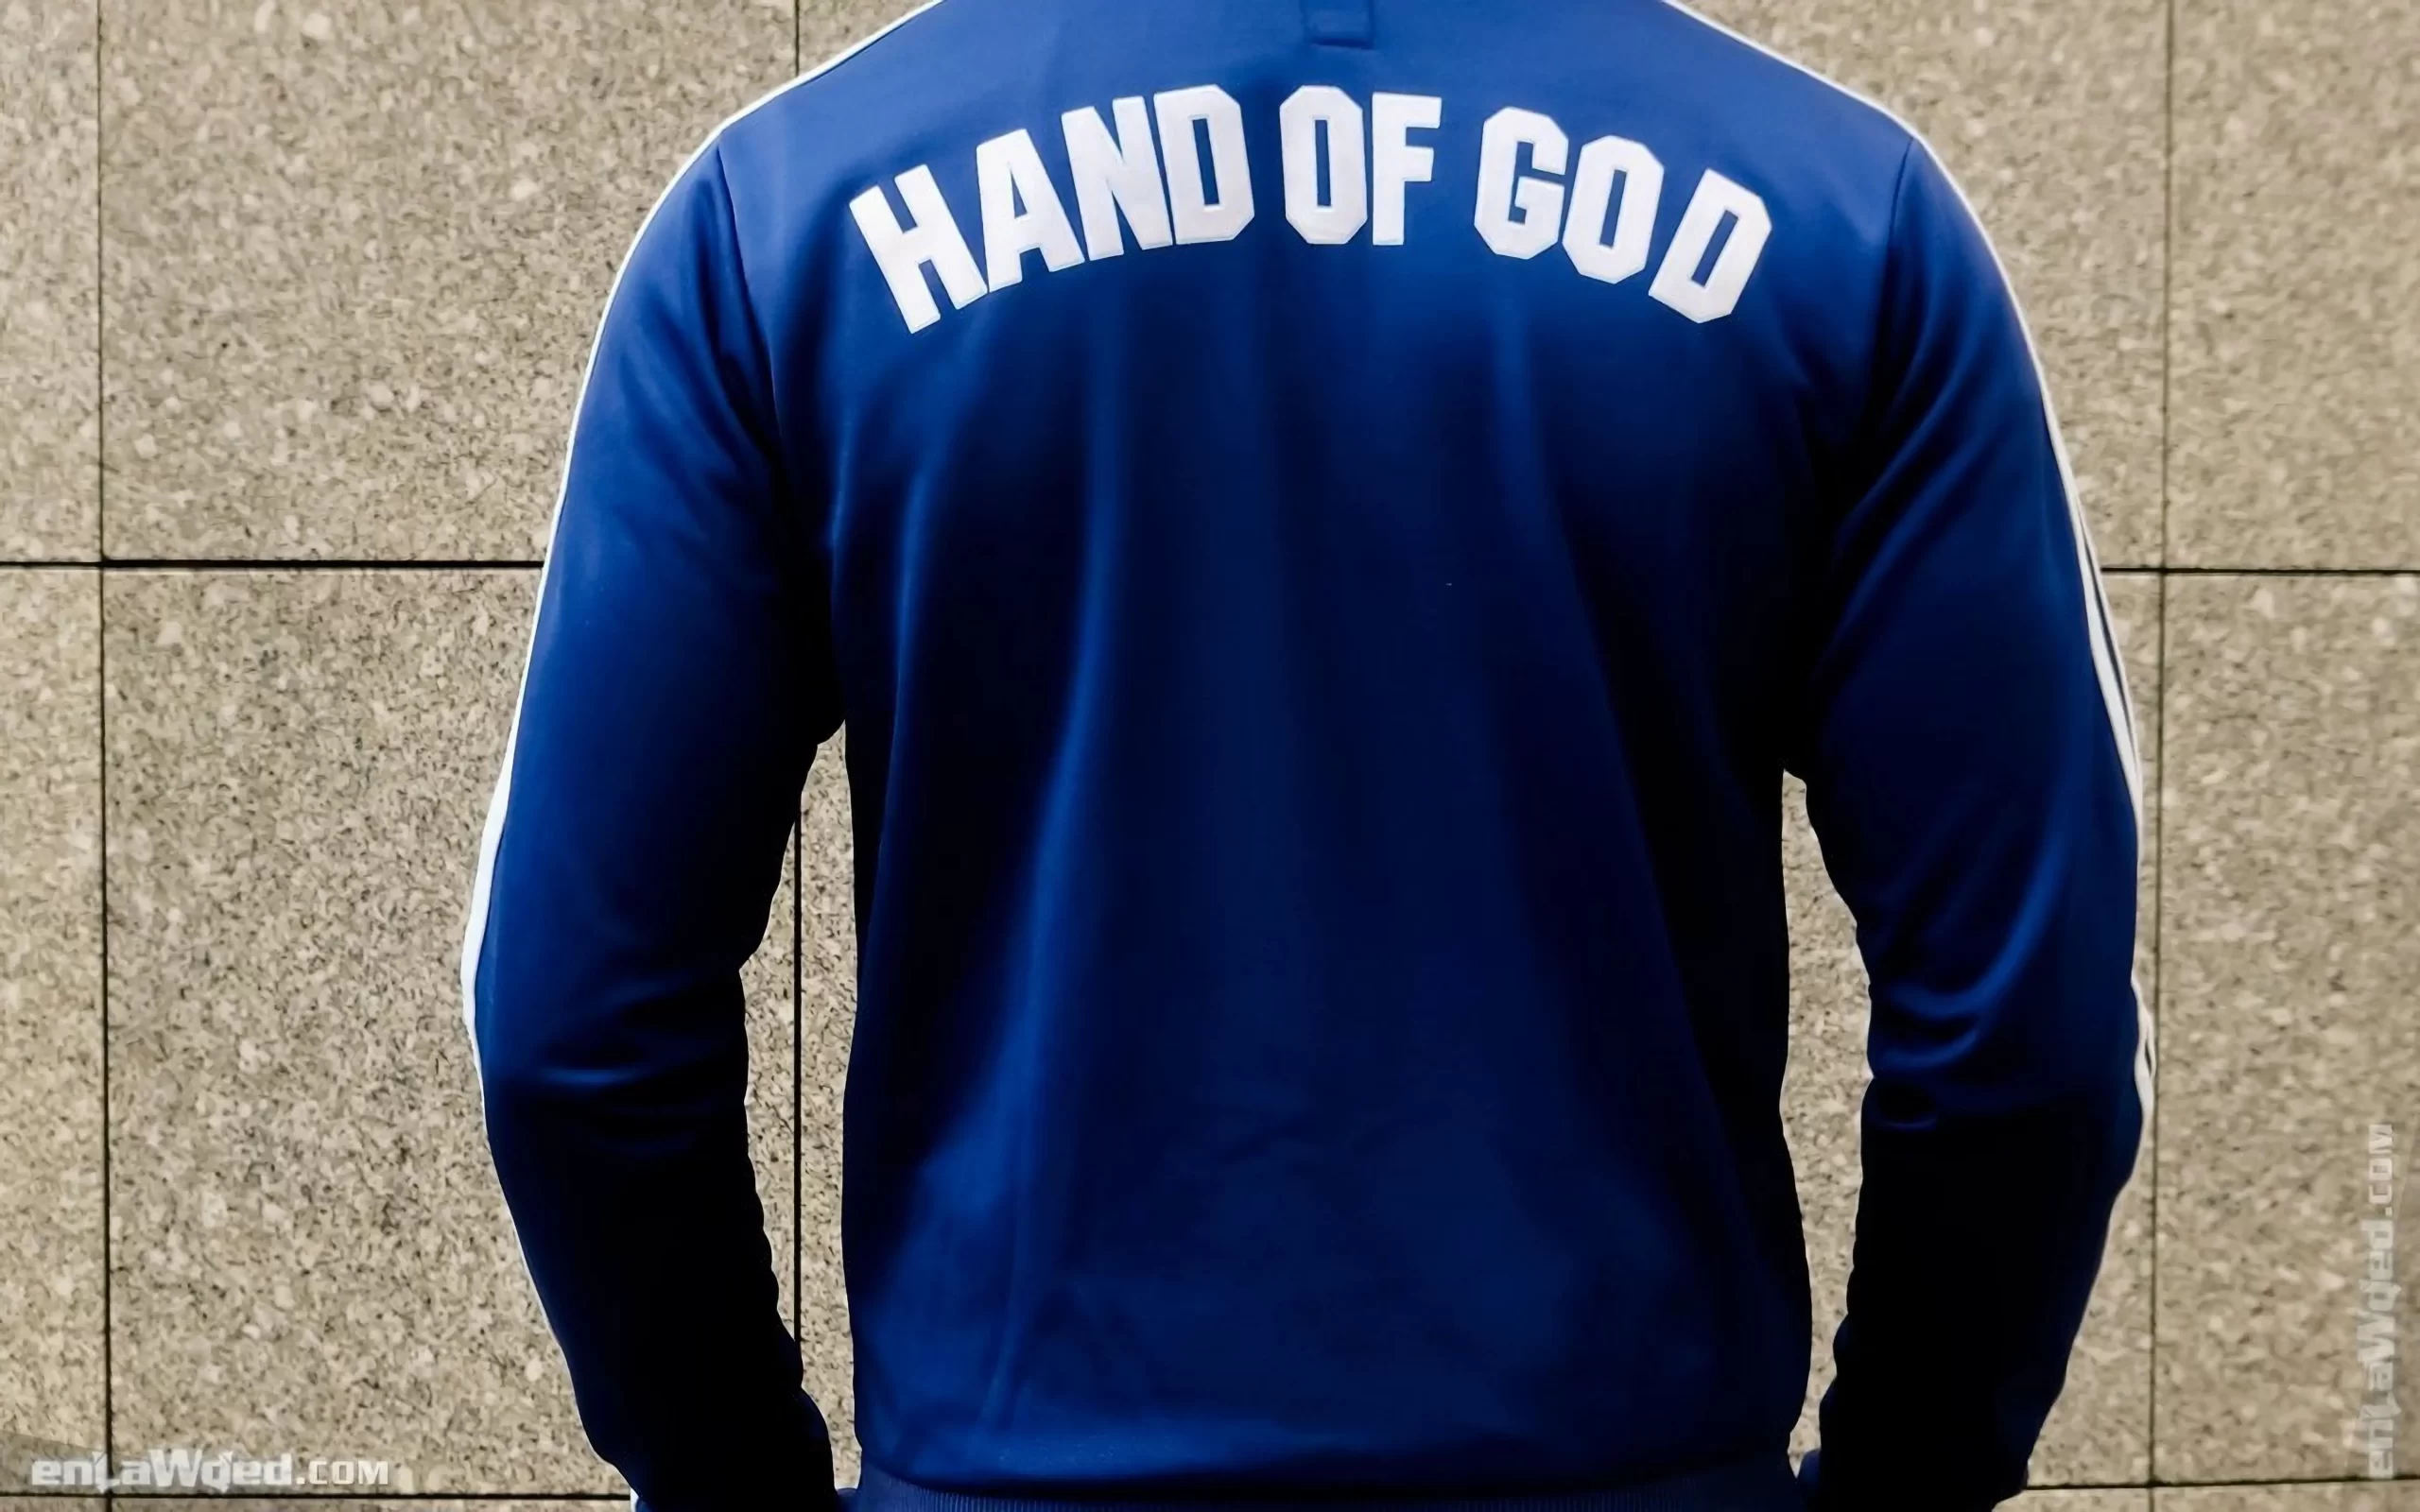 Men’s 2006 Argentina ’86 Hand of God TT by Adidas: Soaring (EnLawded.com file #lmchk89860ip2y123528kg9st)